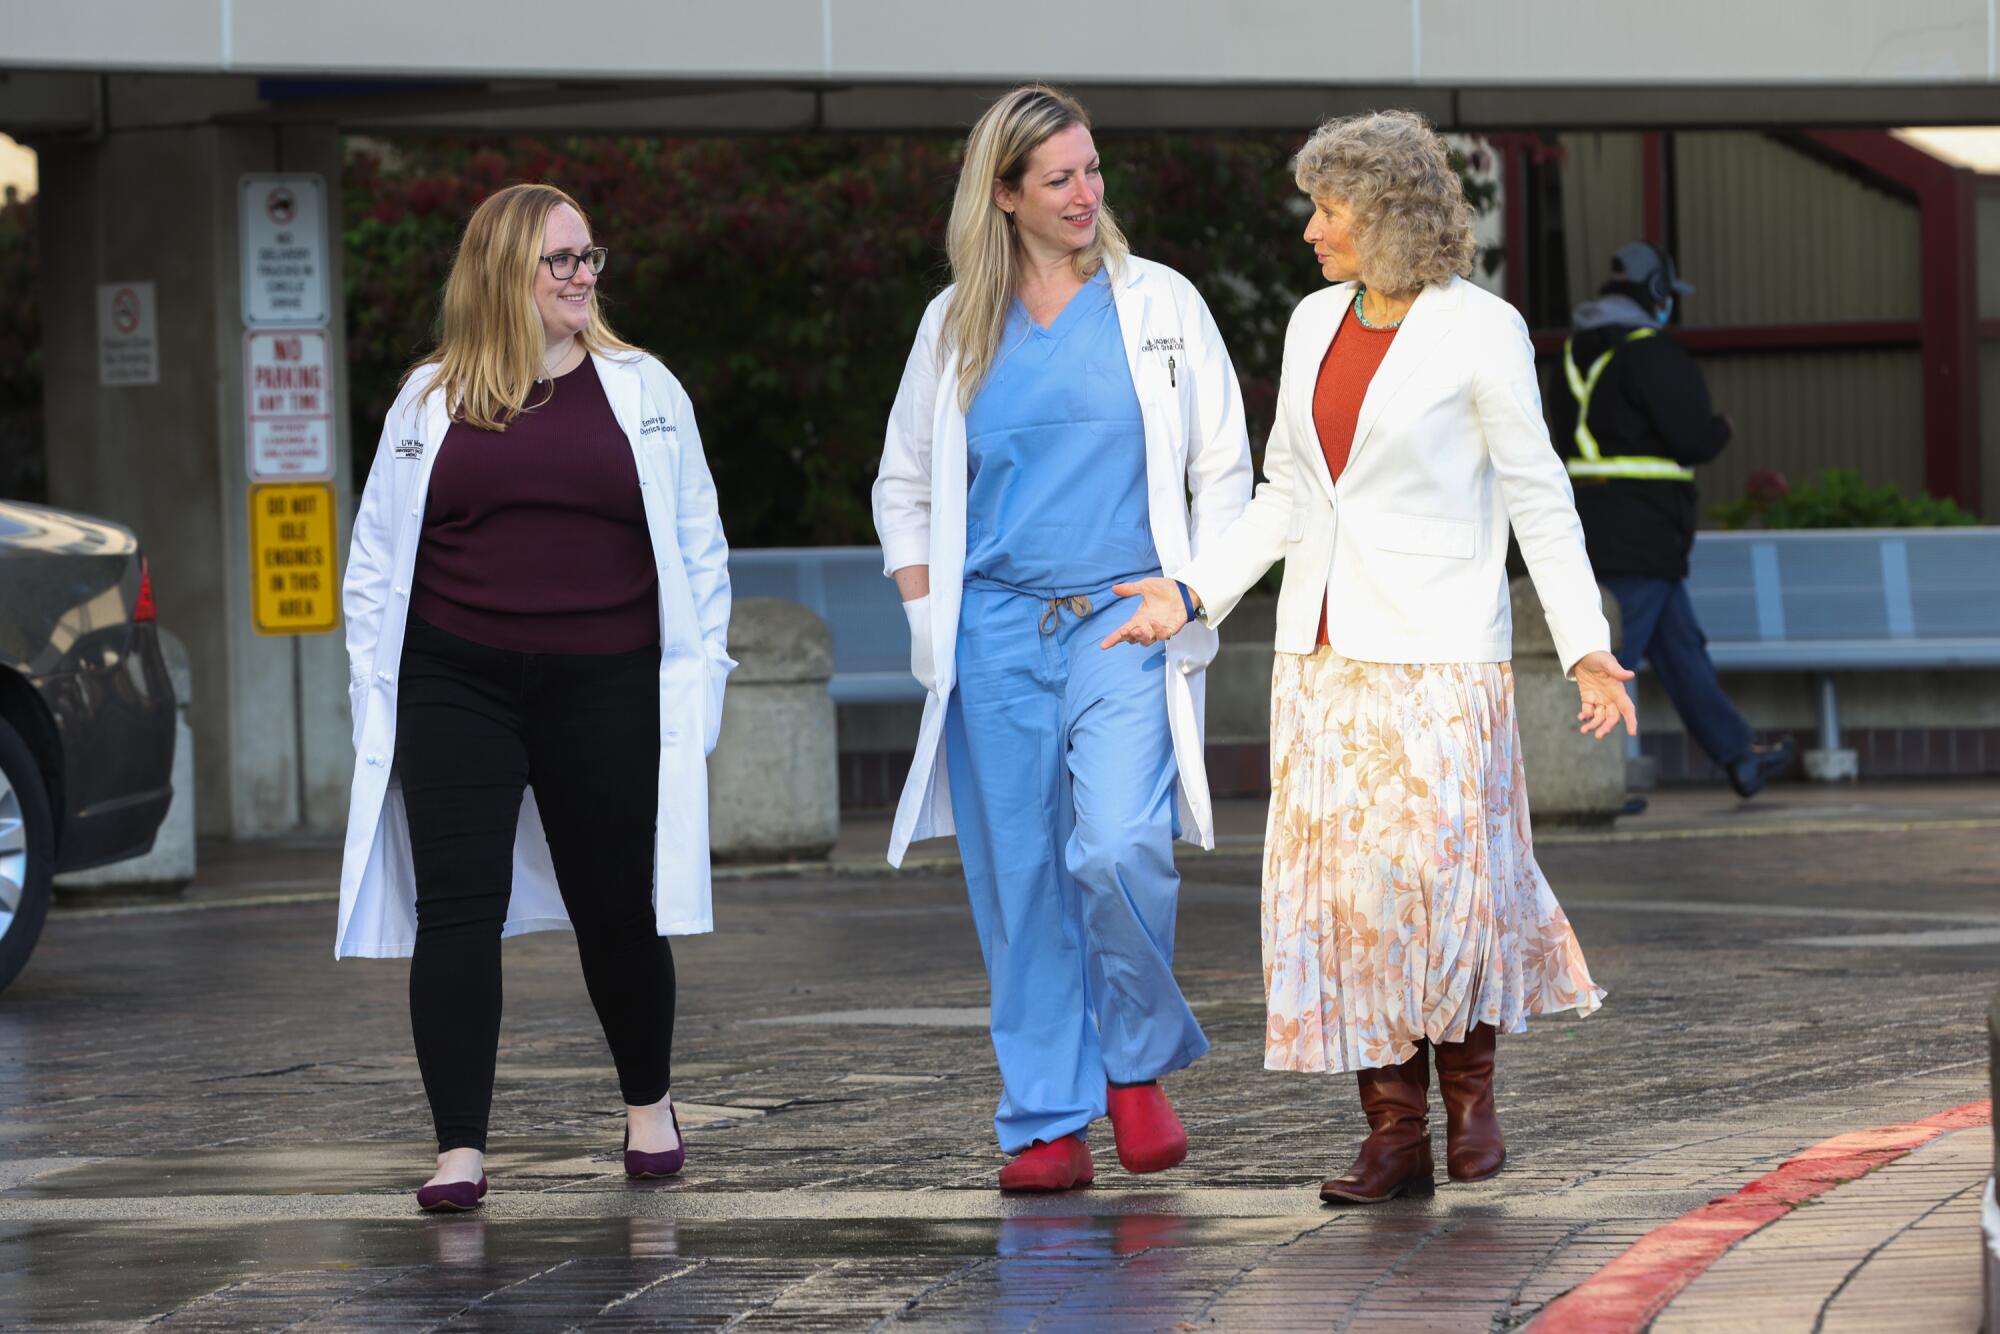 Dr. Emily Fay, Dr. Alisa Kachikis and Dr. Linda Eckert at the University of Washington Medical Center